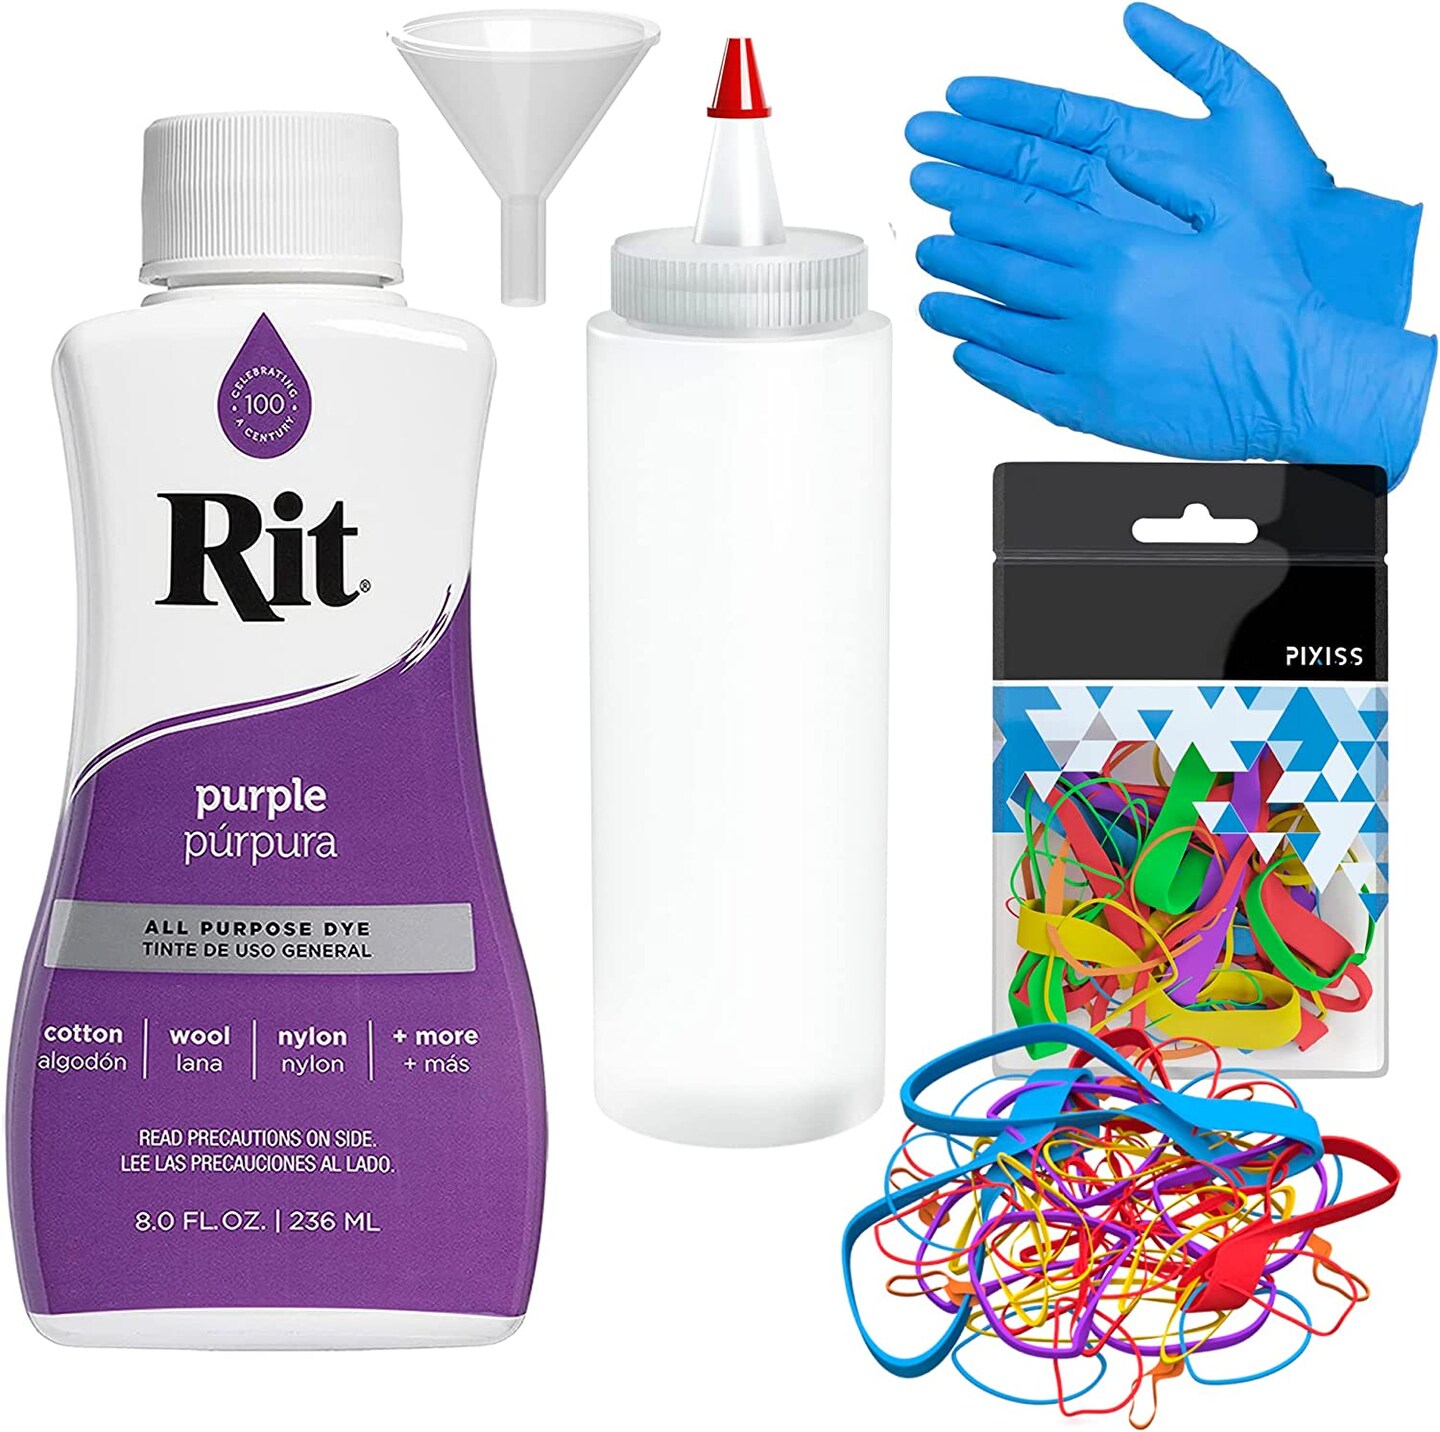 Rit Dye Liquid Purple All-Purpose Dye 8oz, Pixiss Tie Dye Accessories Bundle